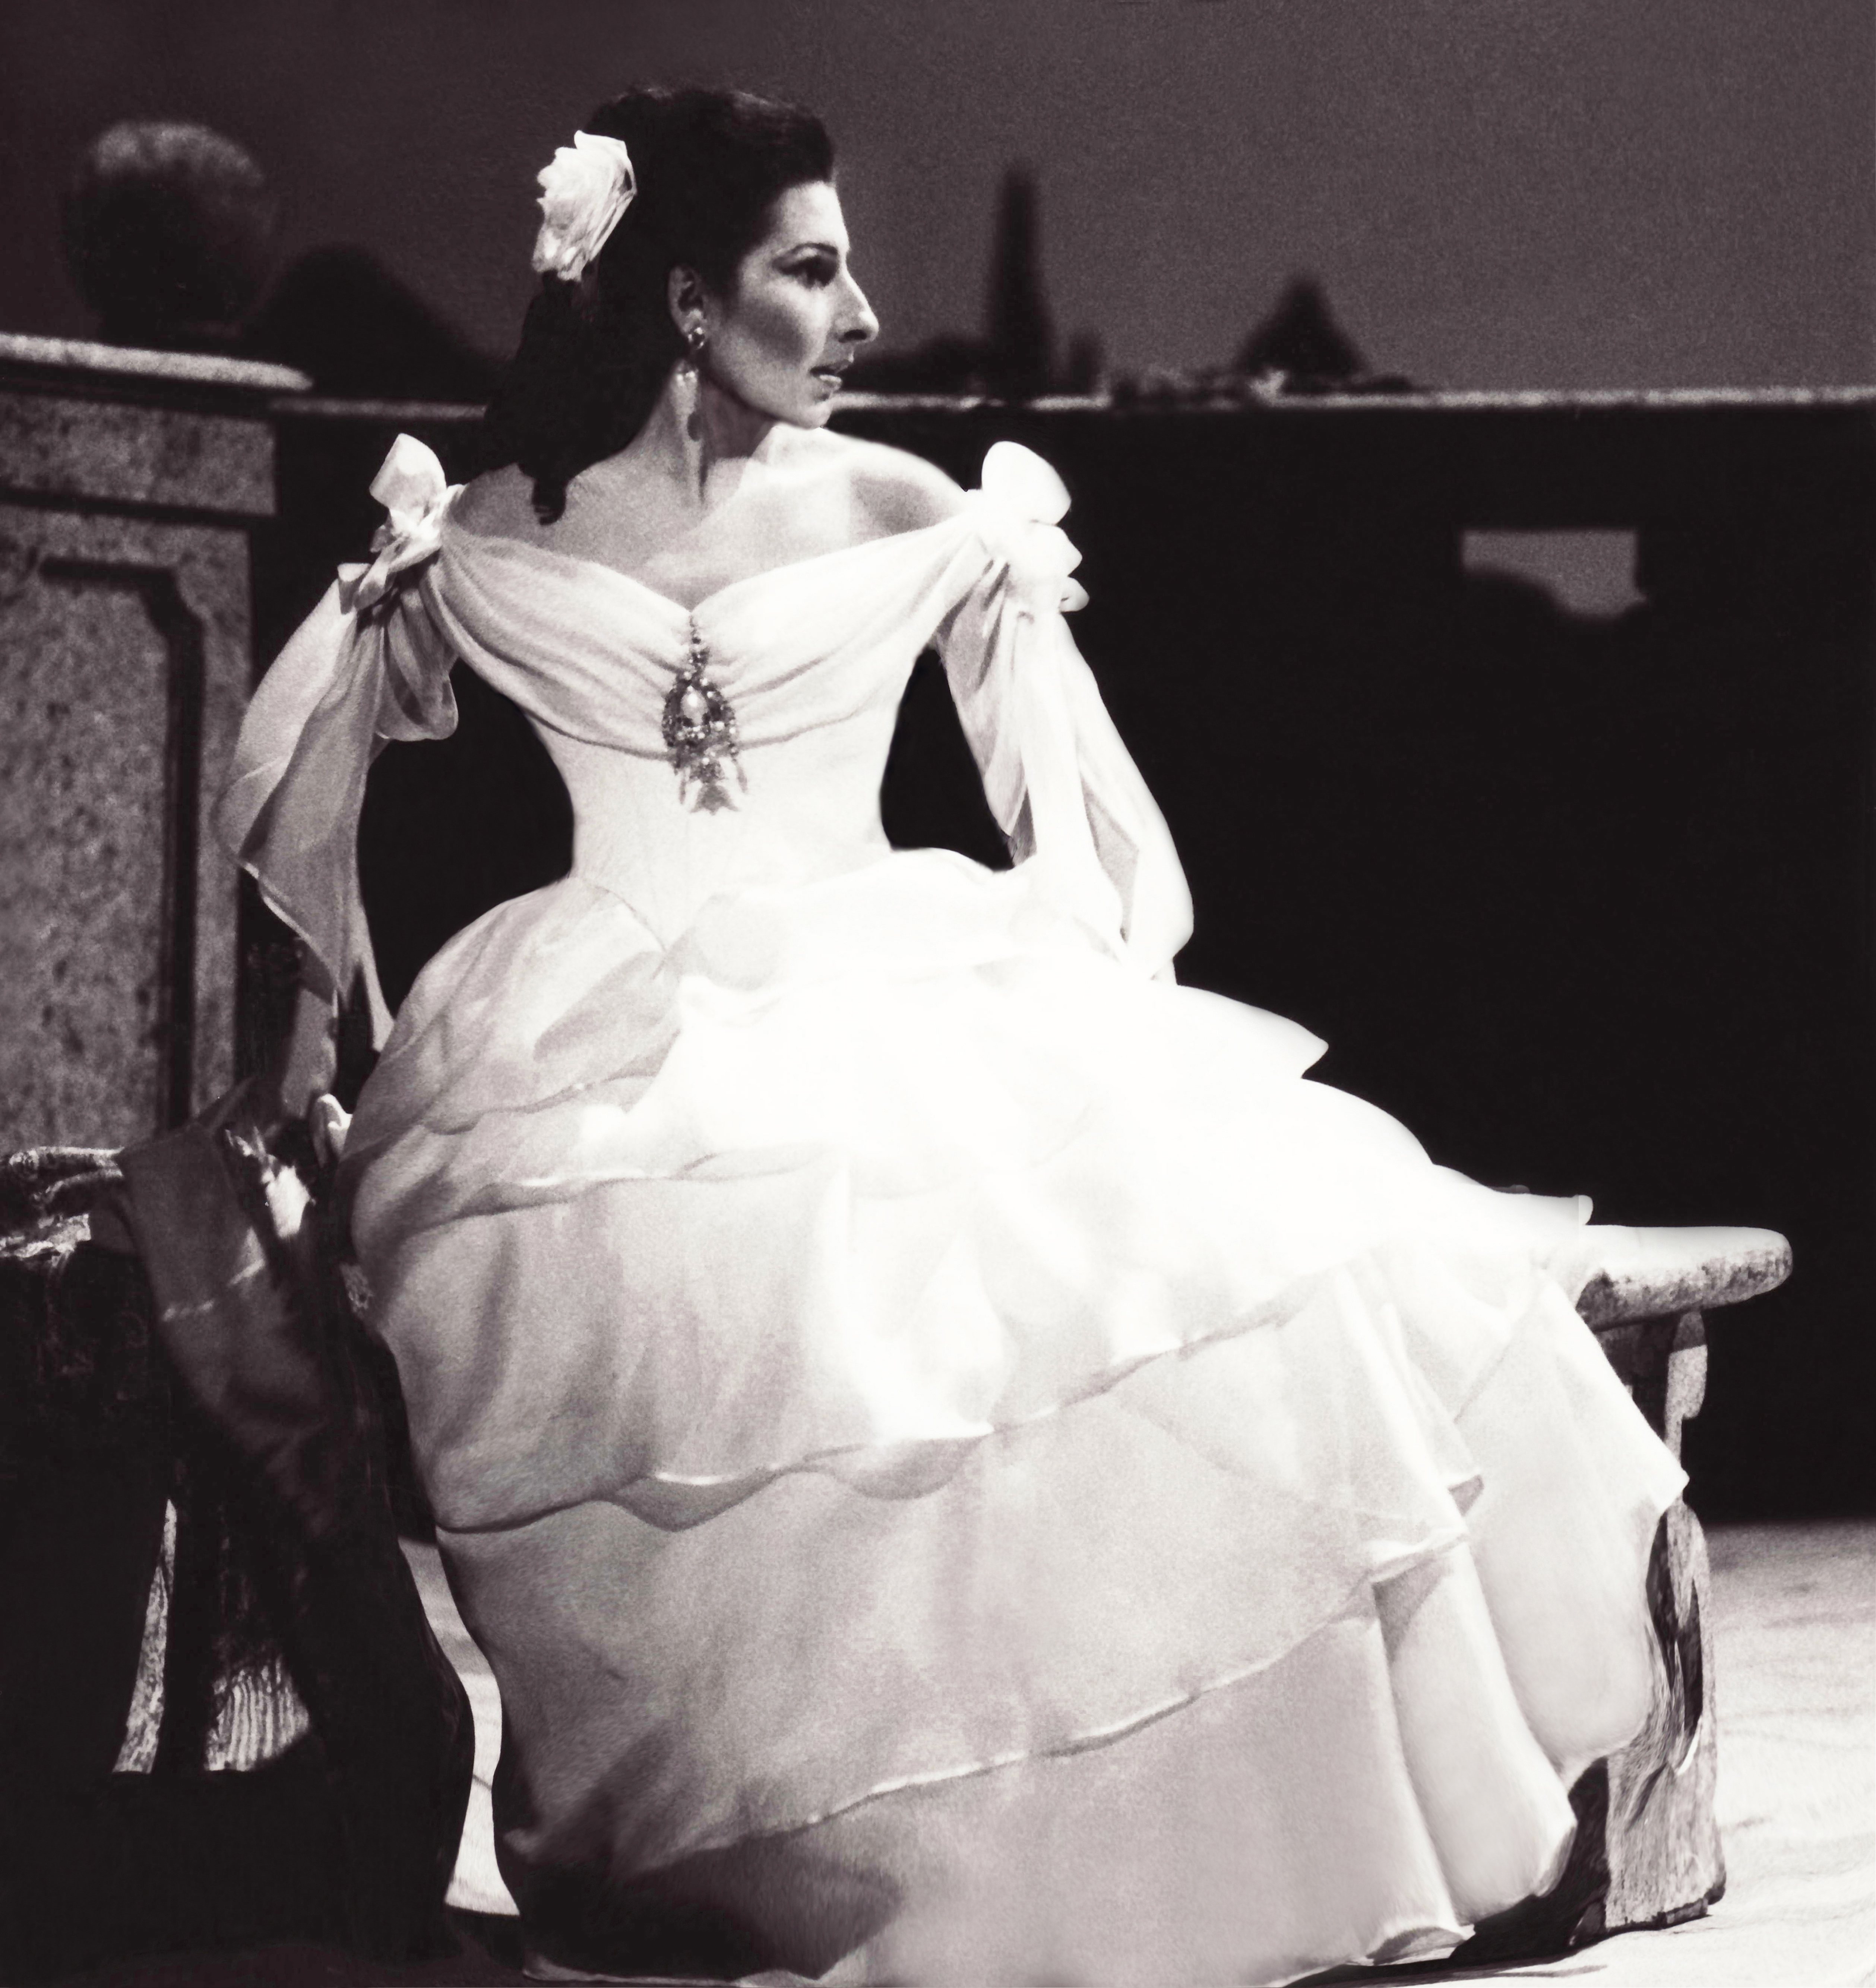 Lucia Aliberti⚘Teatro alla Scala⚘Milan⚘Opera⚘"Don Pasquale"⚘Costumes by Gianni Versace⚘On Stage⚘:http://www.luciaaliberti.it #luciaaliberti #costumesbygianniversace #teatroallascala #milan #donpasquale #opera #onstage